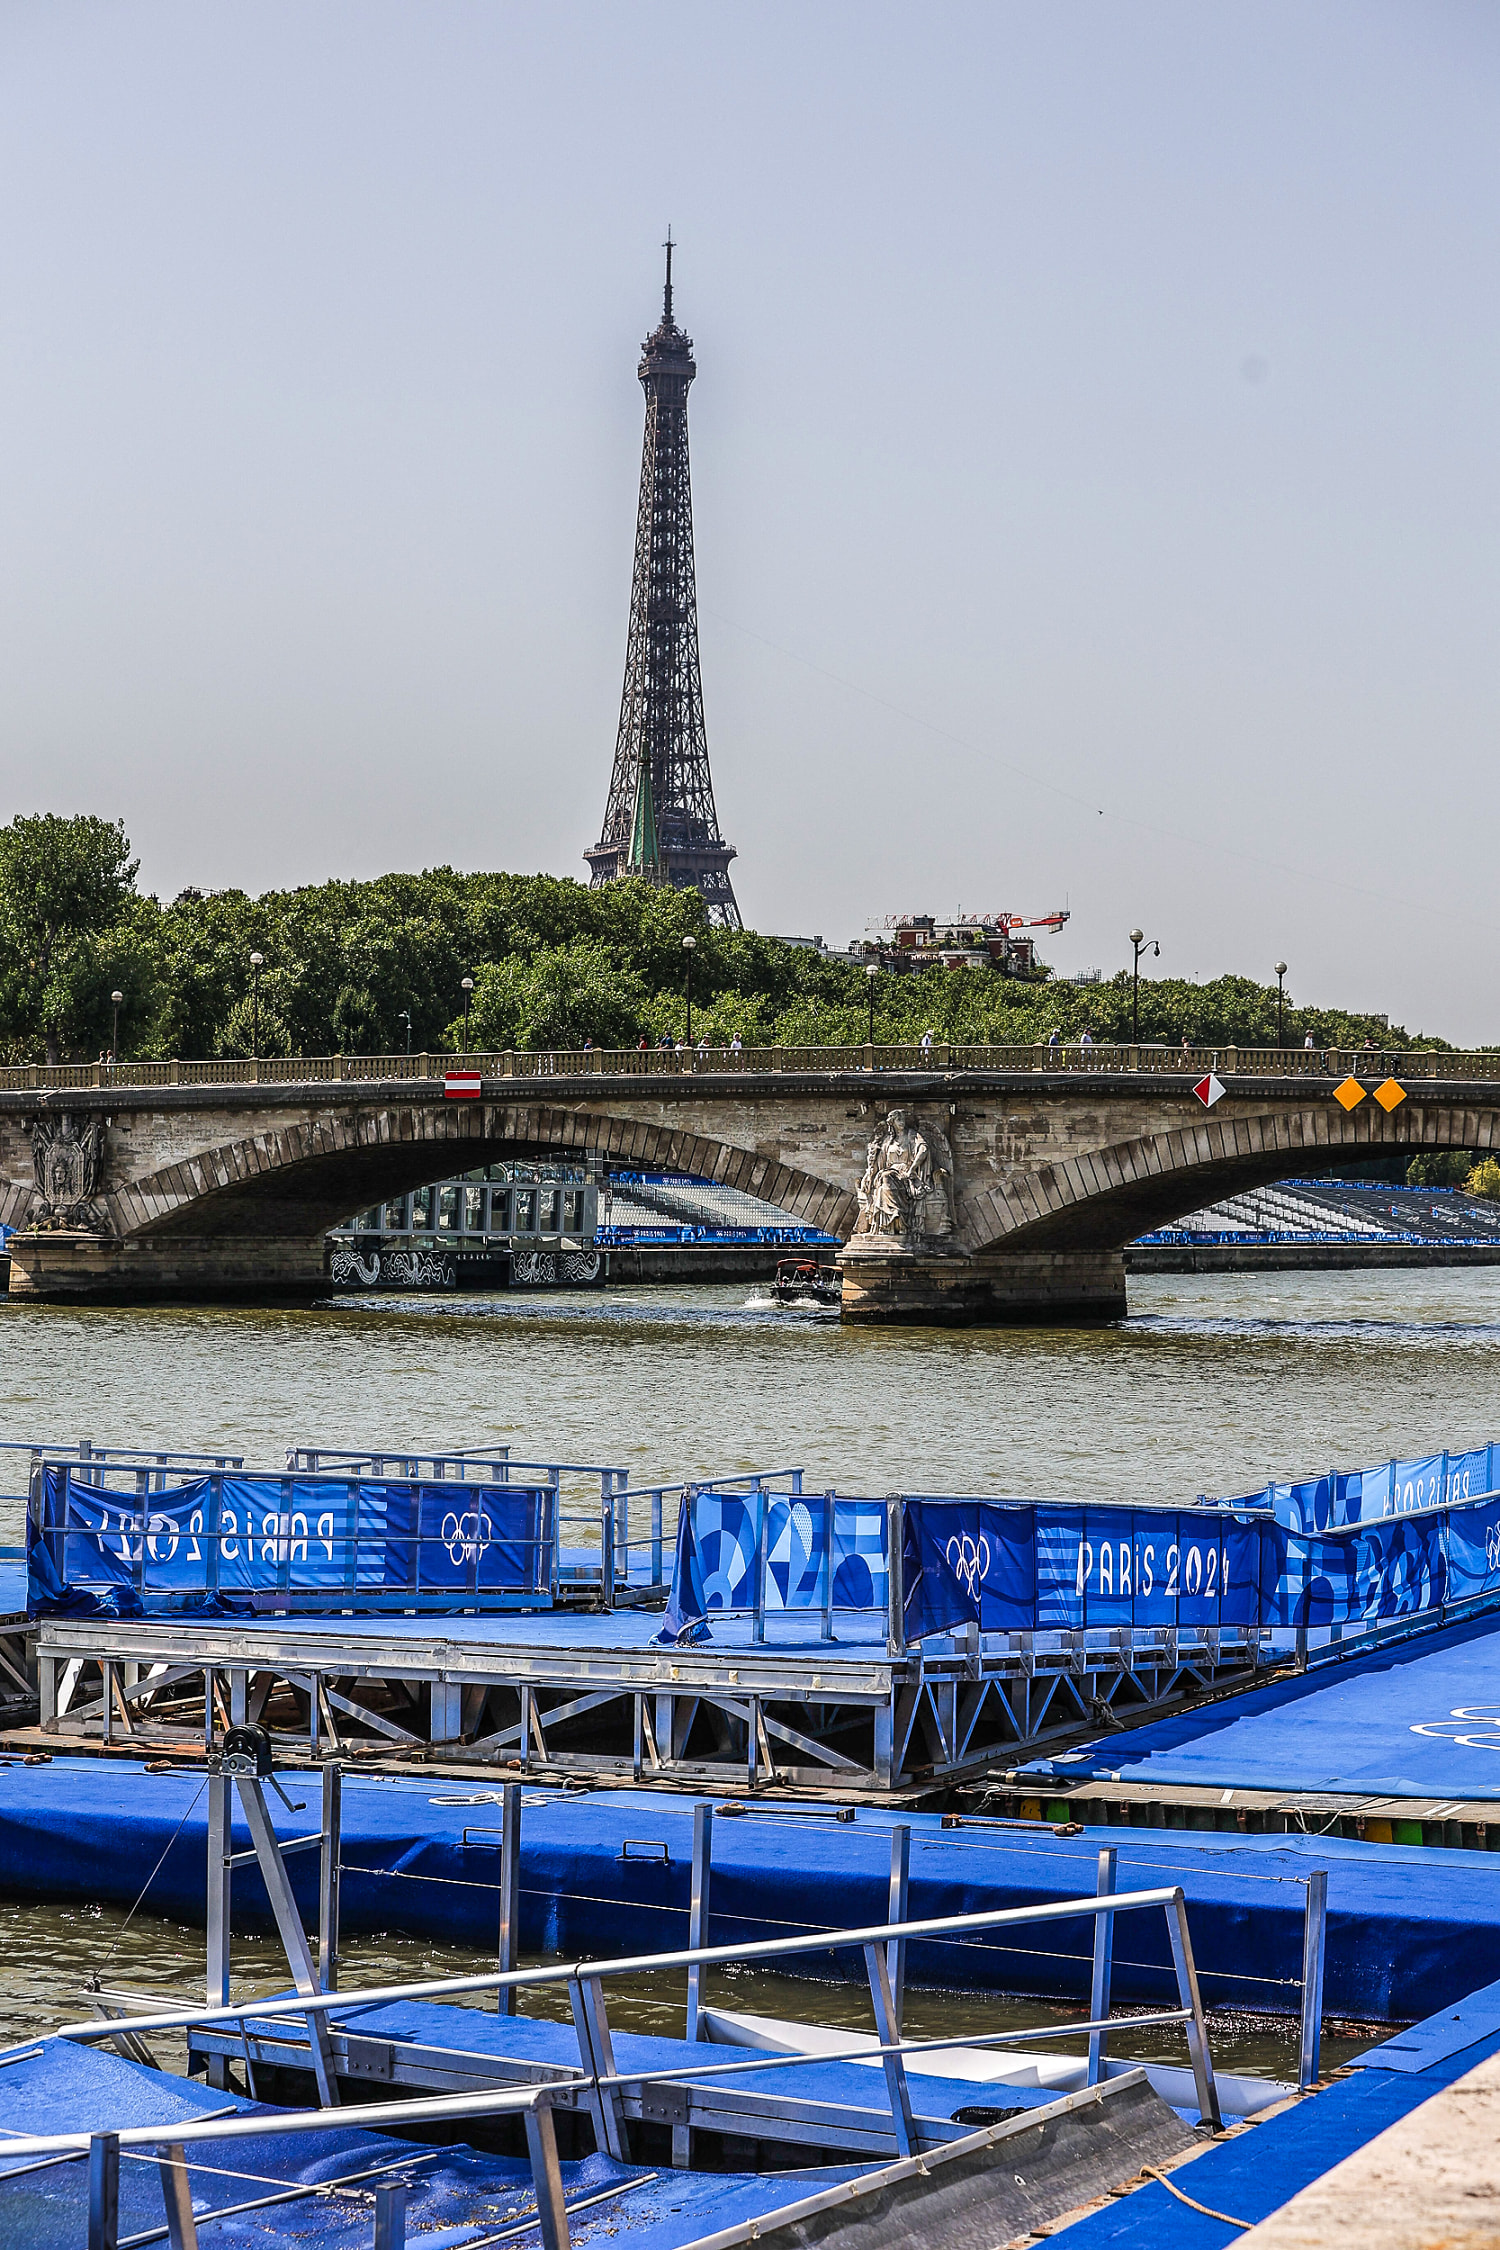 Triathletes swim in Seine after last-minute testing deems water safe